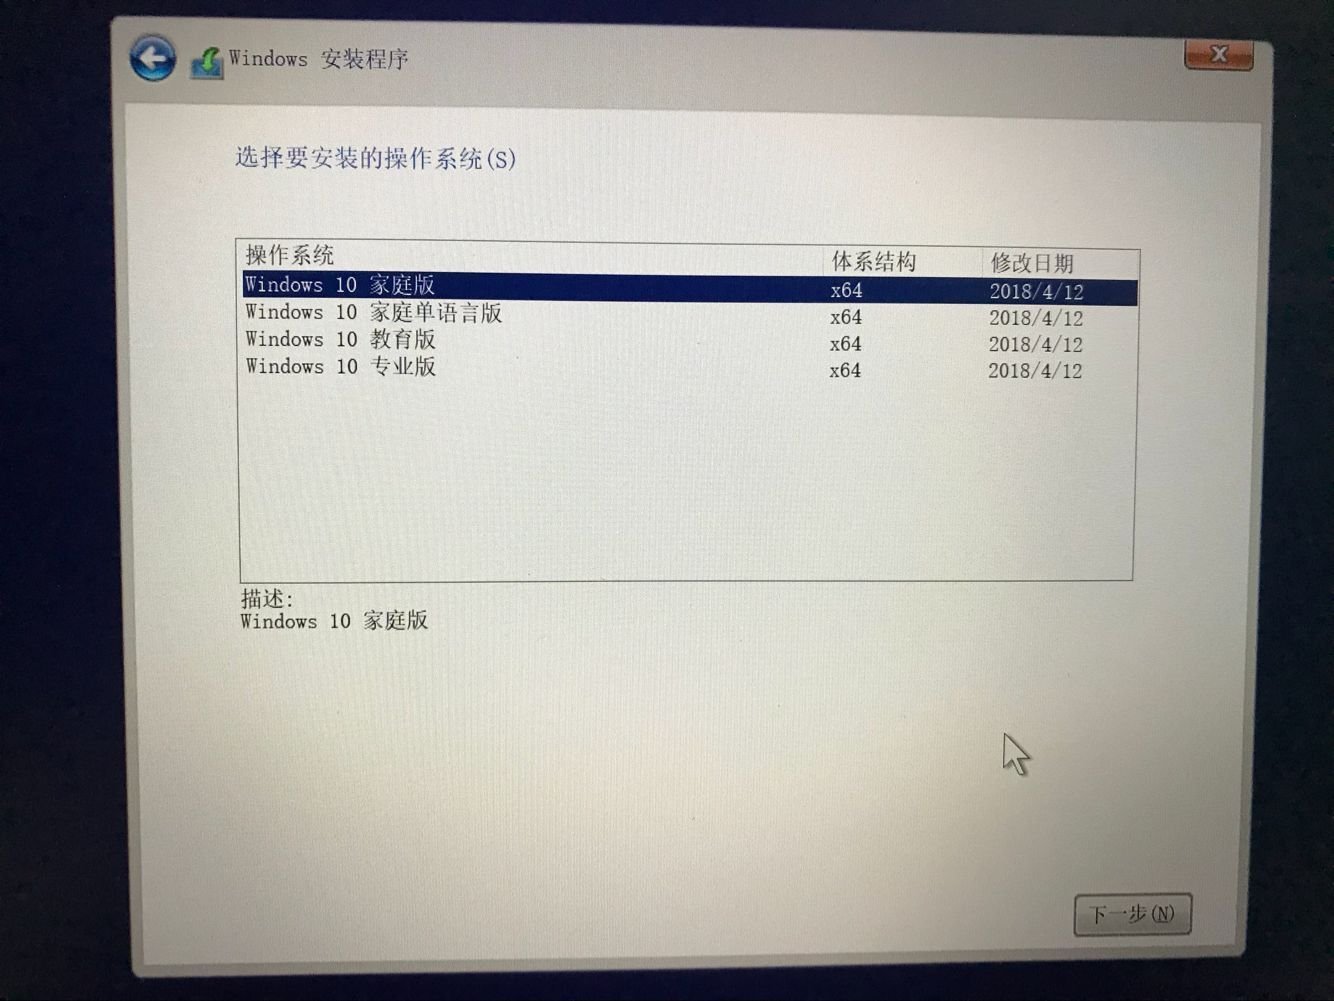 1709 & 1803 MediaCreationTool cannot Download Win10 Home China 9c6809f4-1b5f-414d-8cc1-0ba25bccdcdd?upload=true.jpg